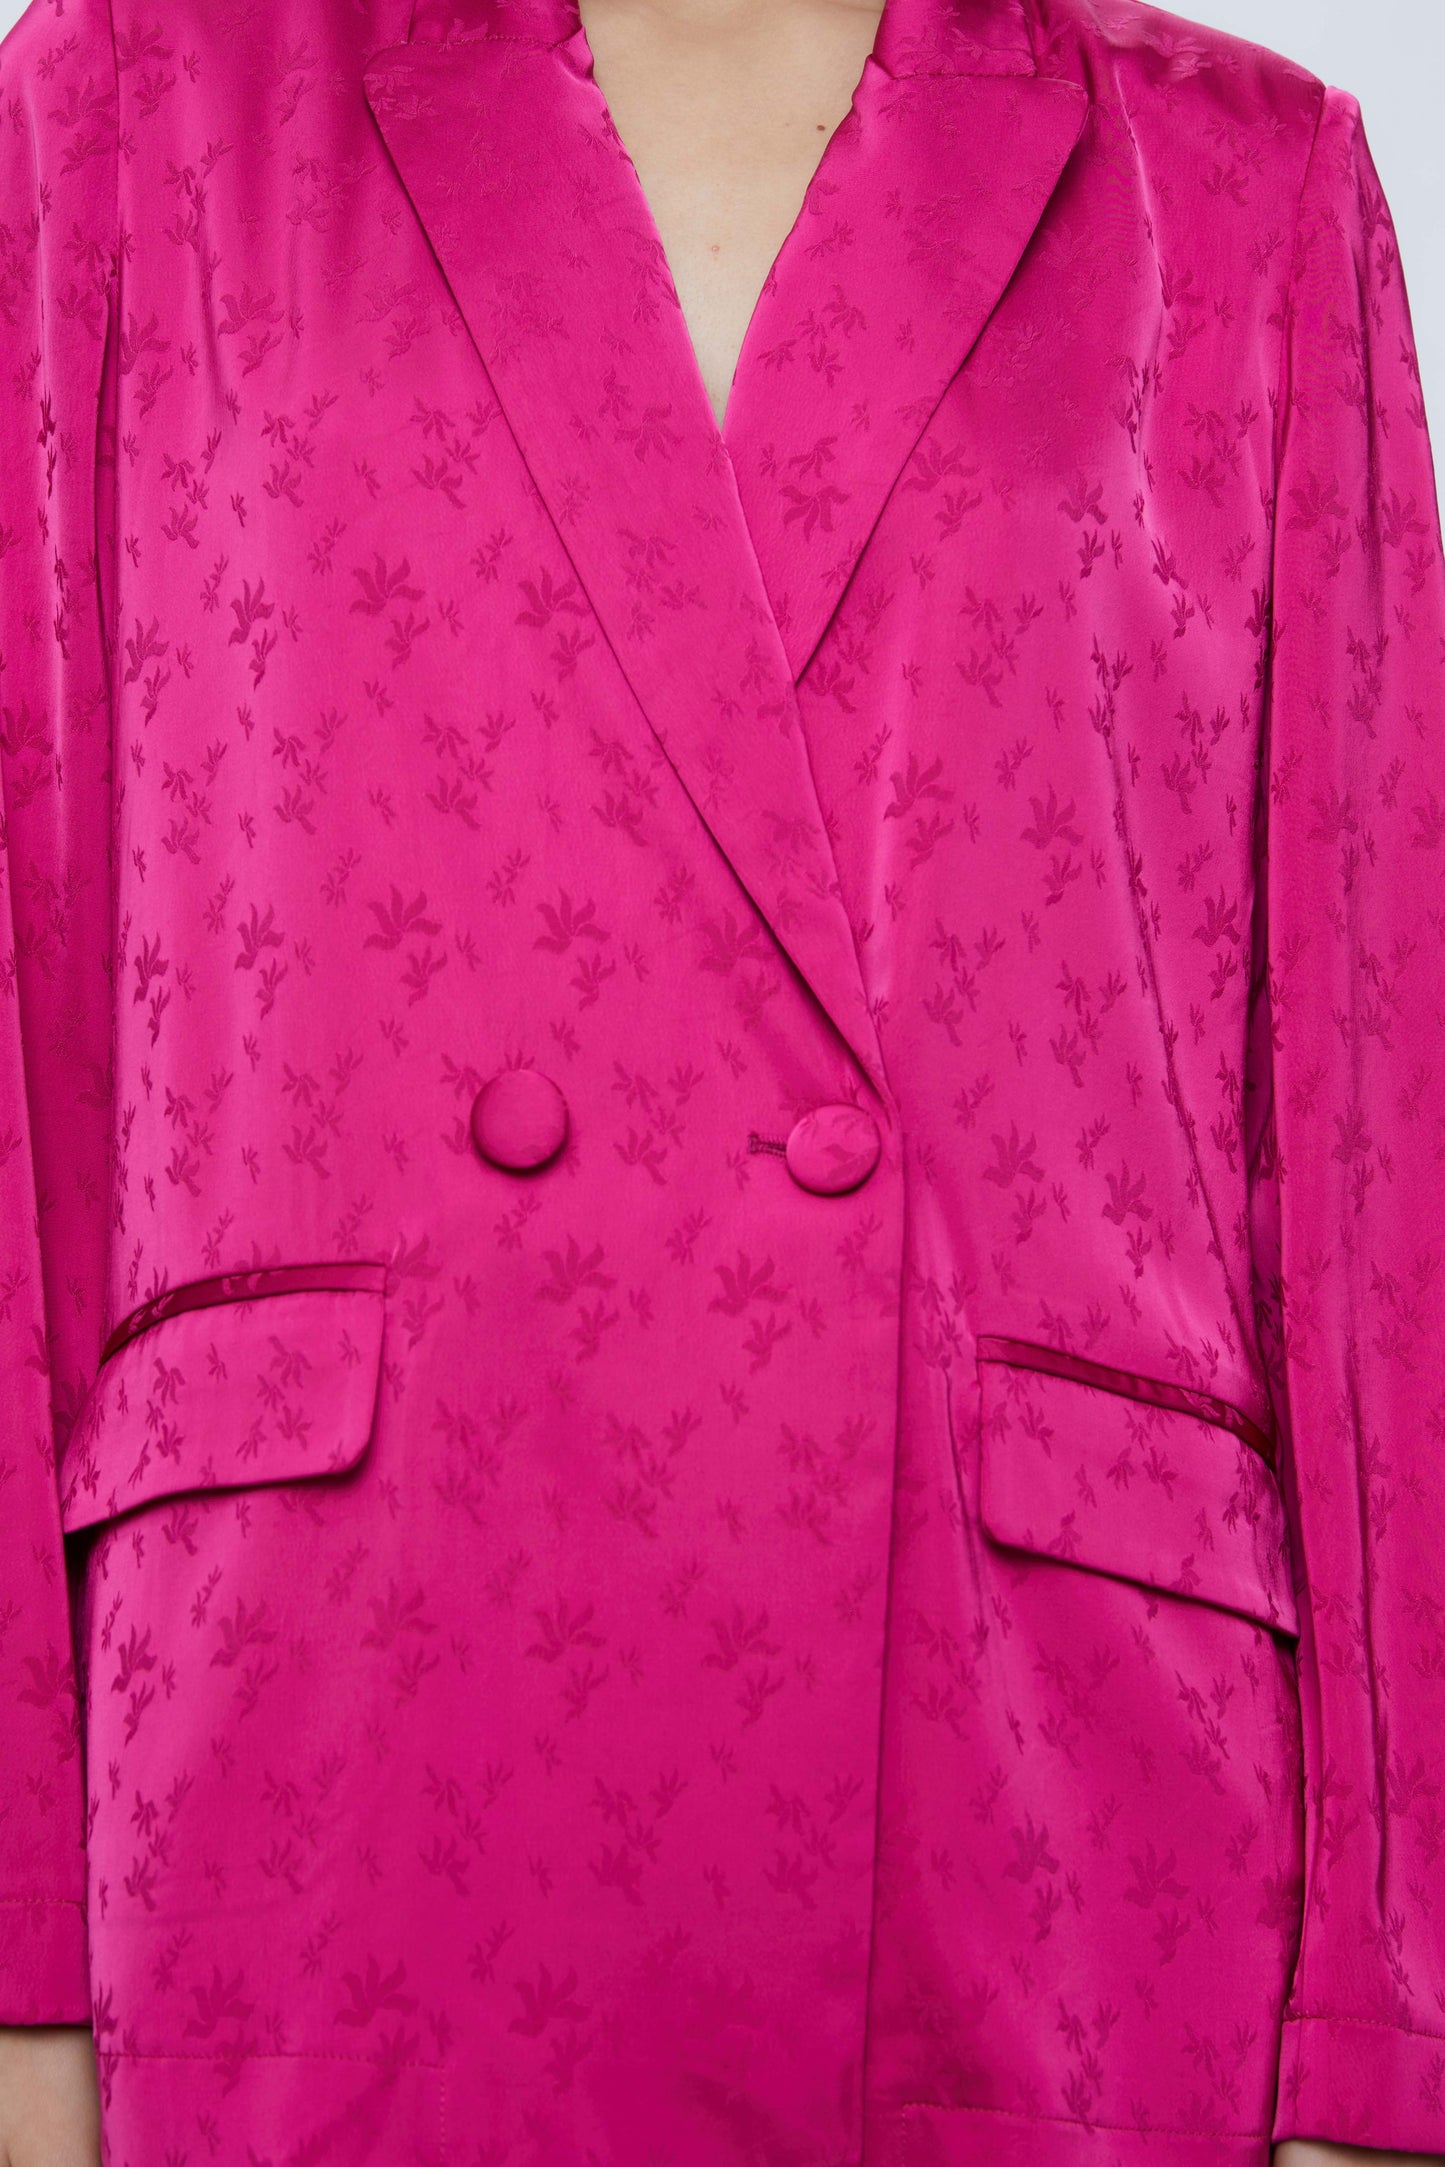 Flowing blazer in pink jacquard